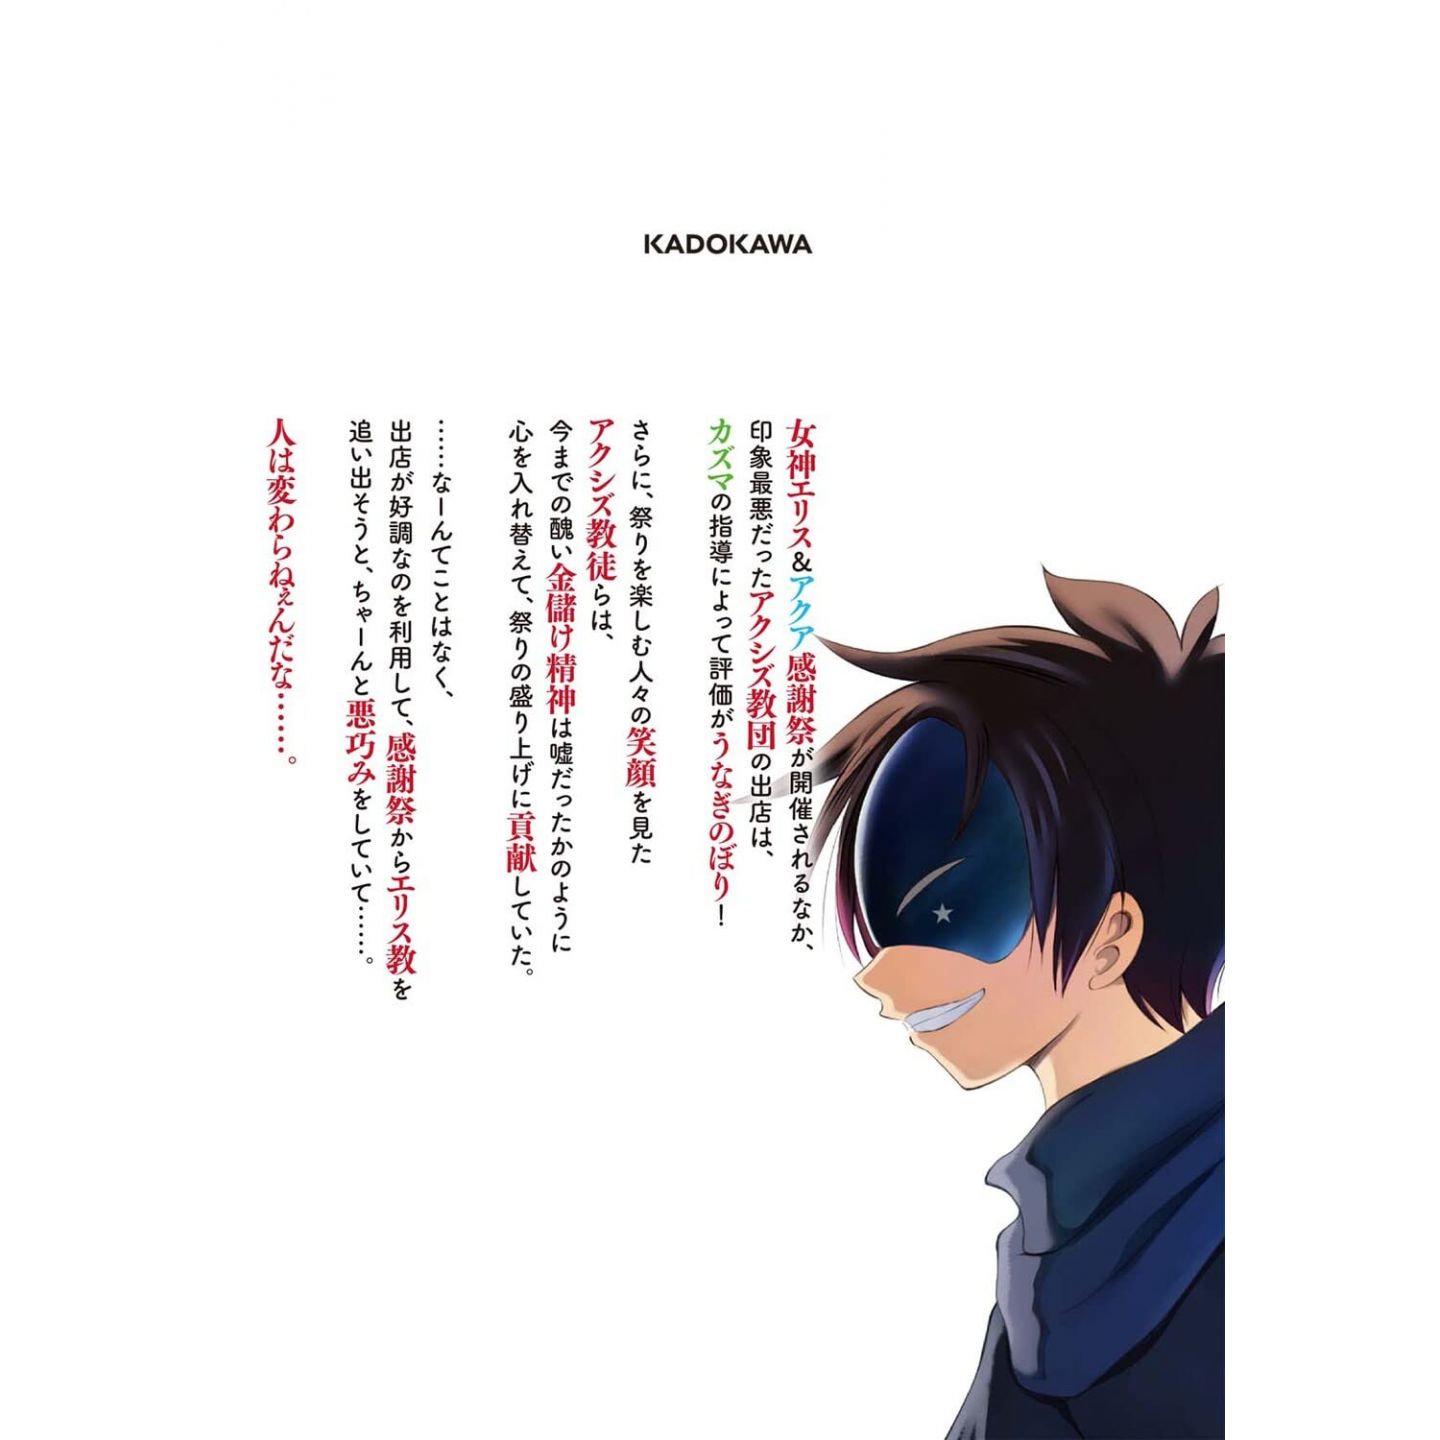 Konosuba: God's Blessing on This Wonderful World!, Vol. 15 (manga)  (Konosuba (manga), 15)